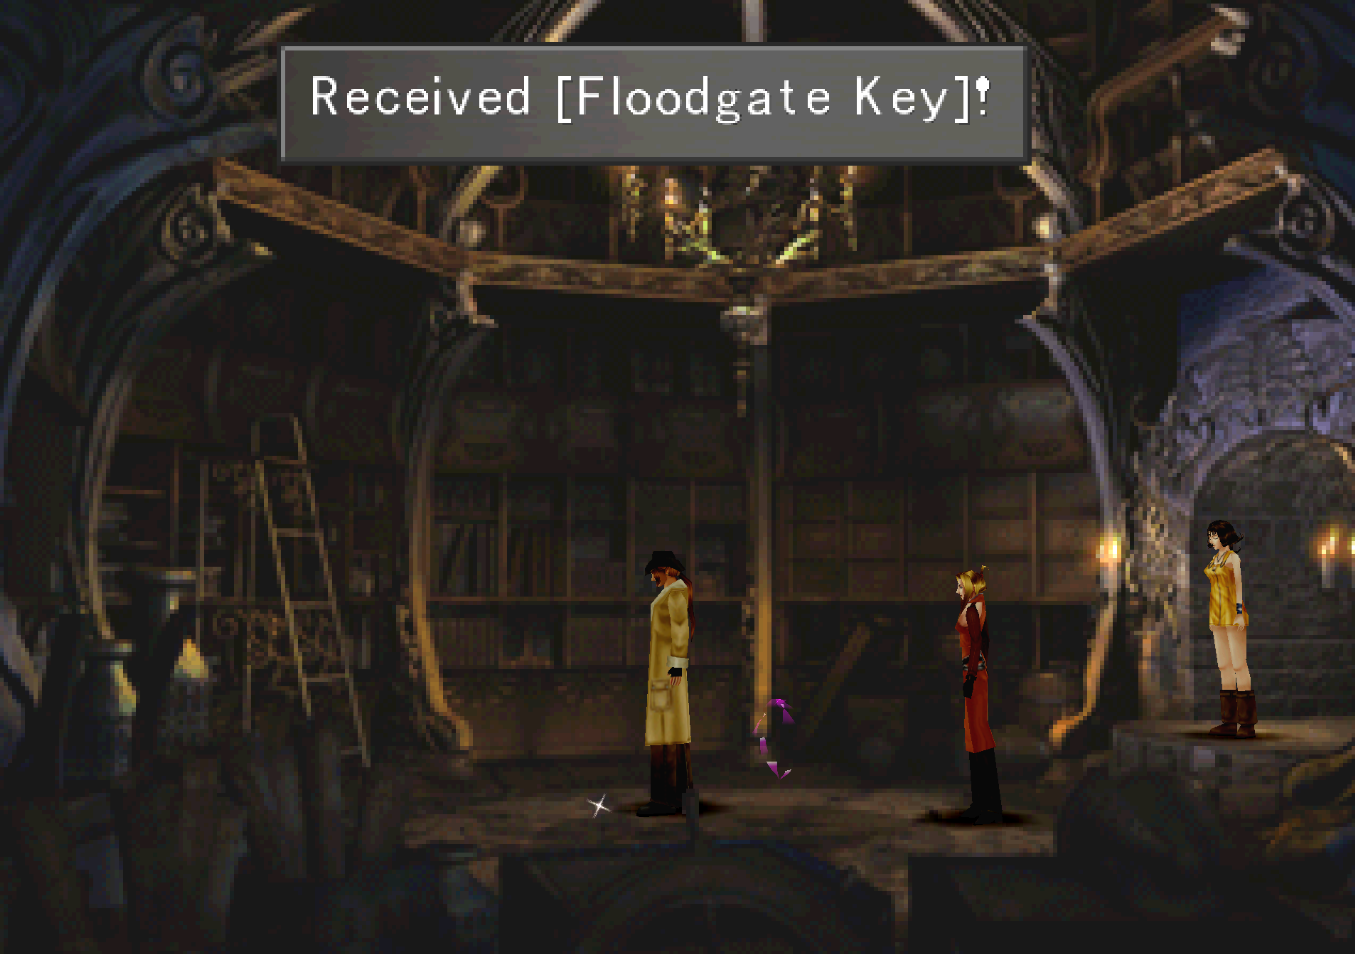 Floodgate Key Received